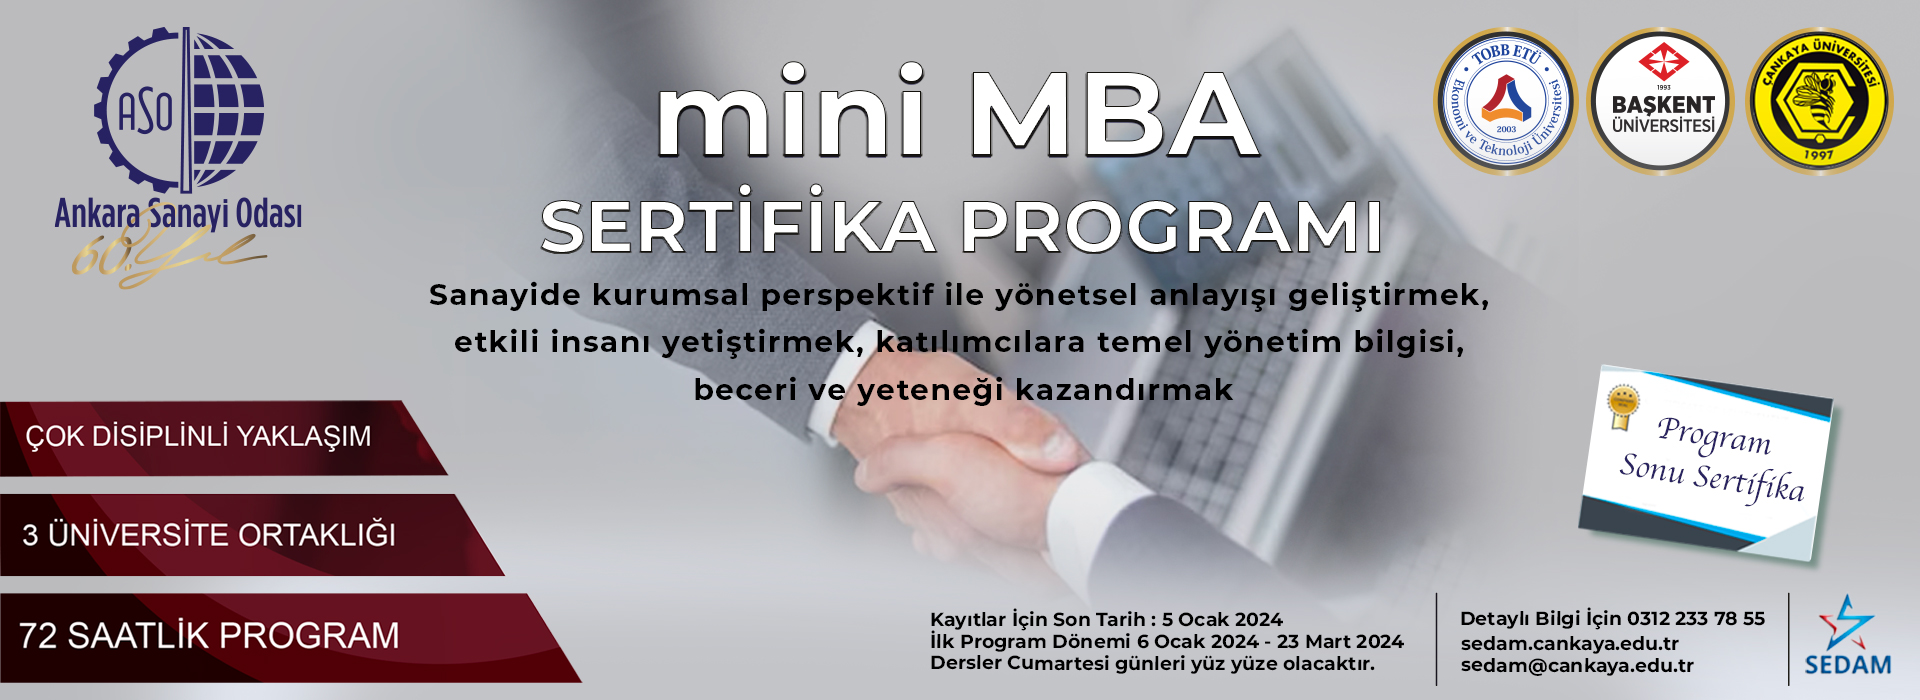 Mini MBA SERTİFİKA PROGRAMI